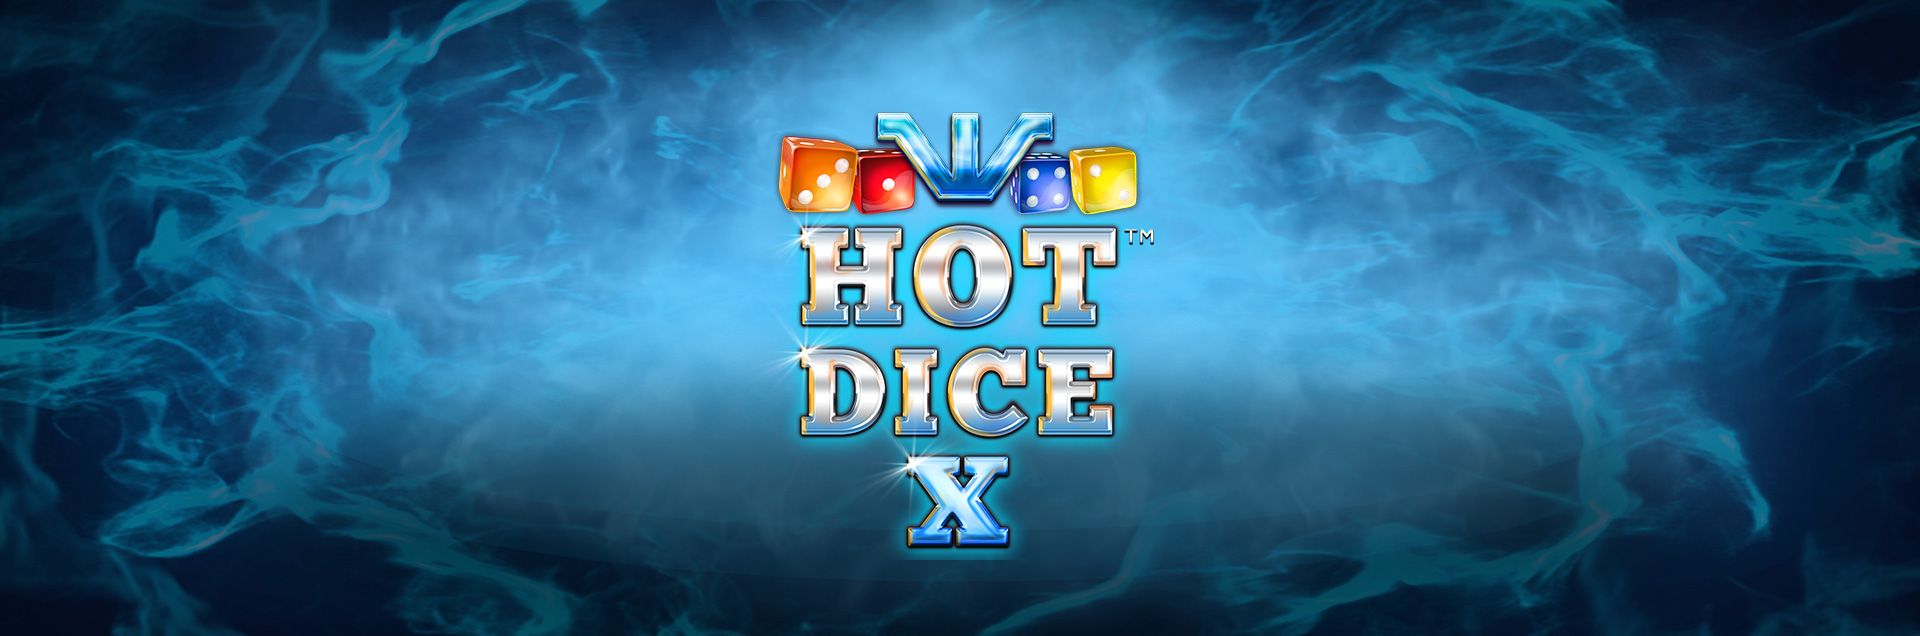 Hot Dice X header games